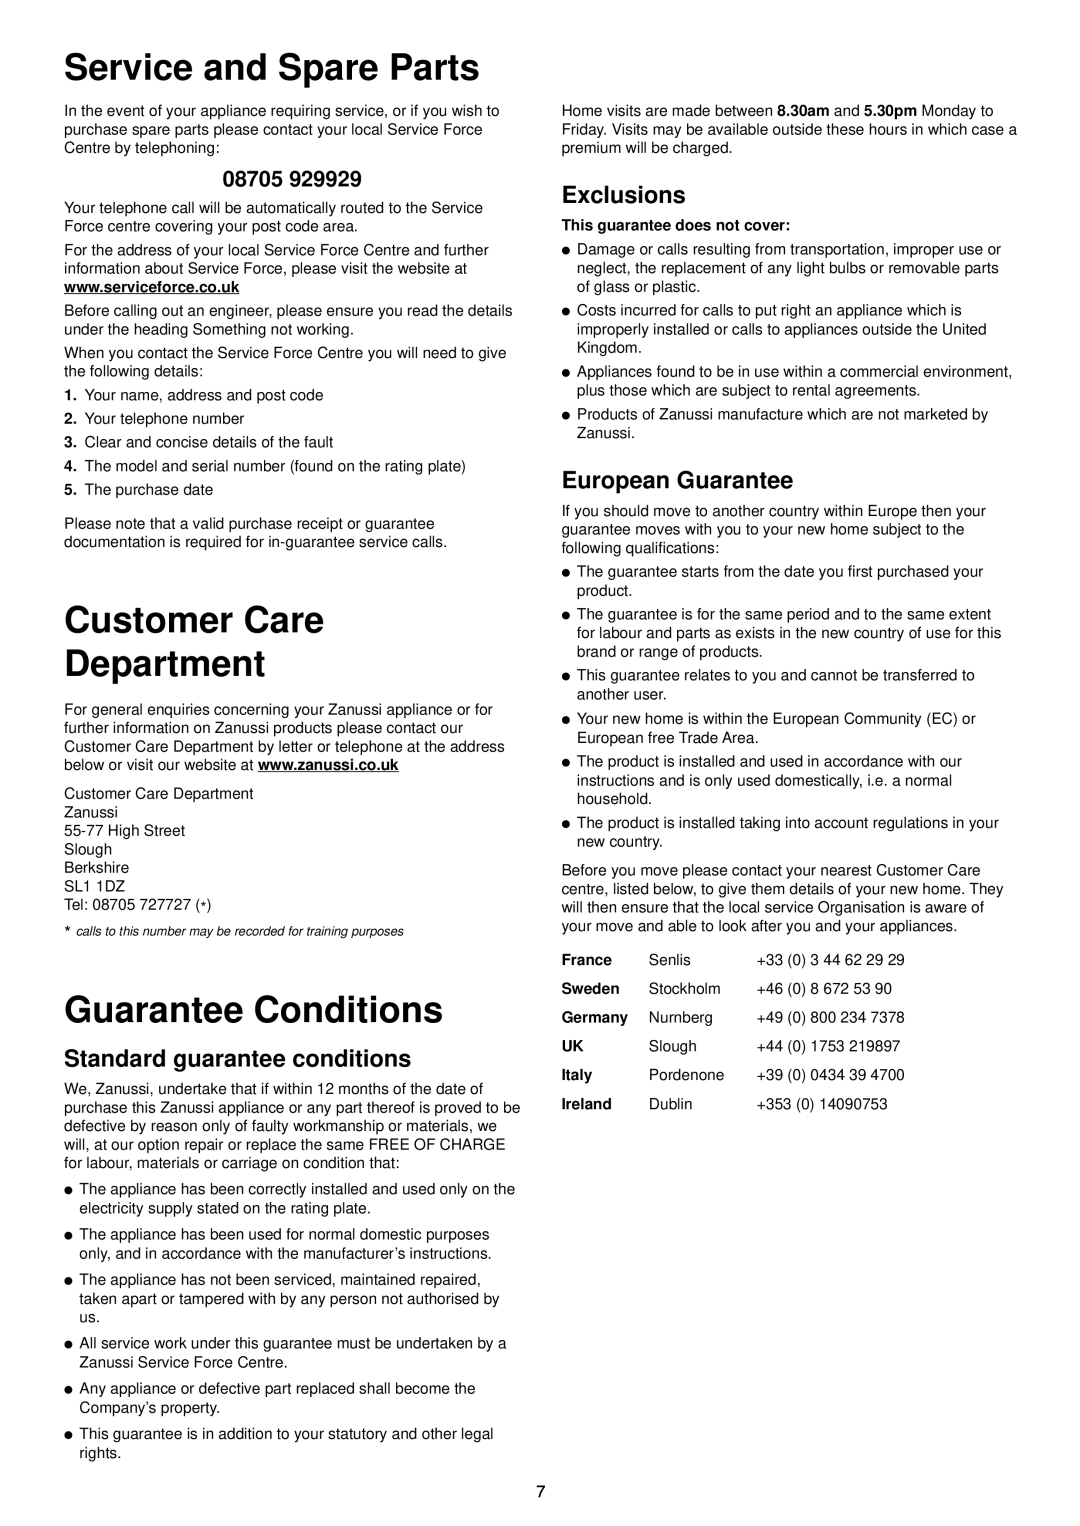 Zanussi DWS 909 Service and Spare Parts, Customer Care Department, Guarantee Conditions, Standard guarantee conditions 